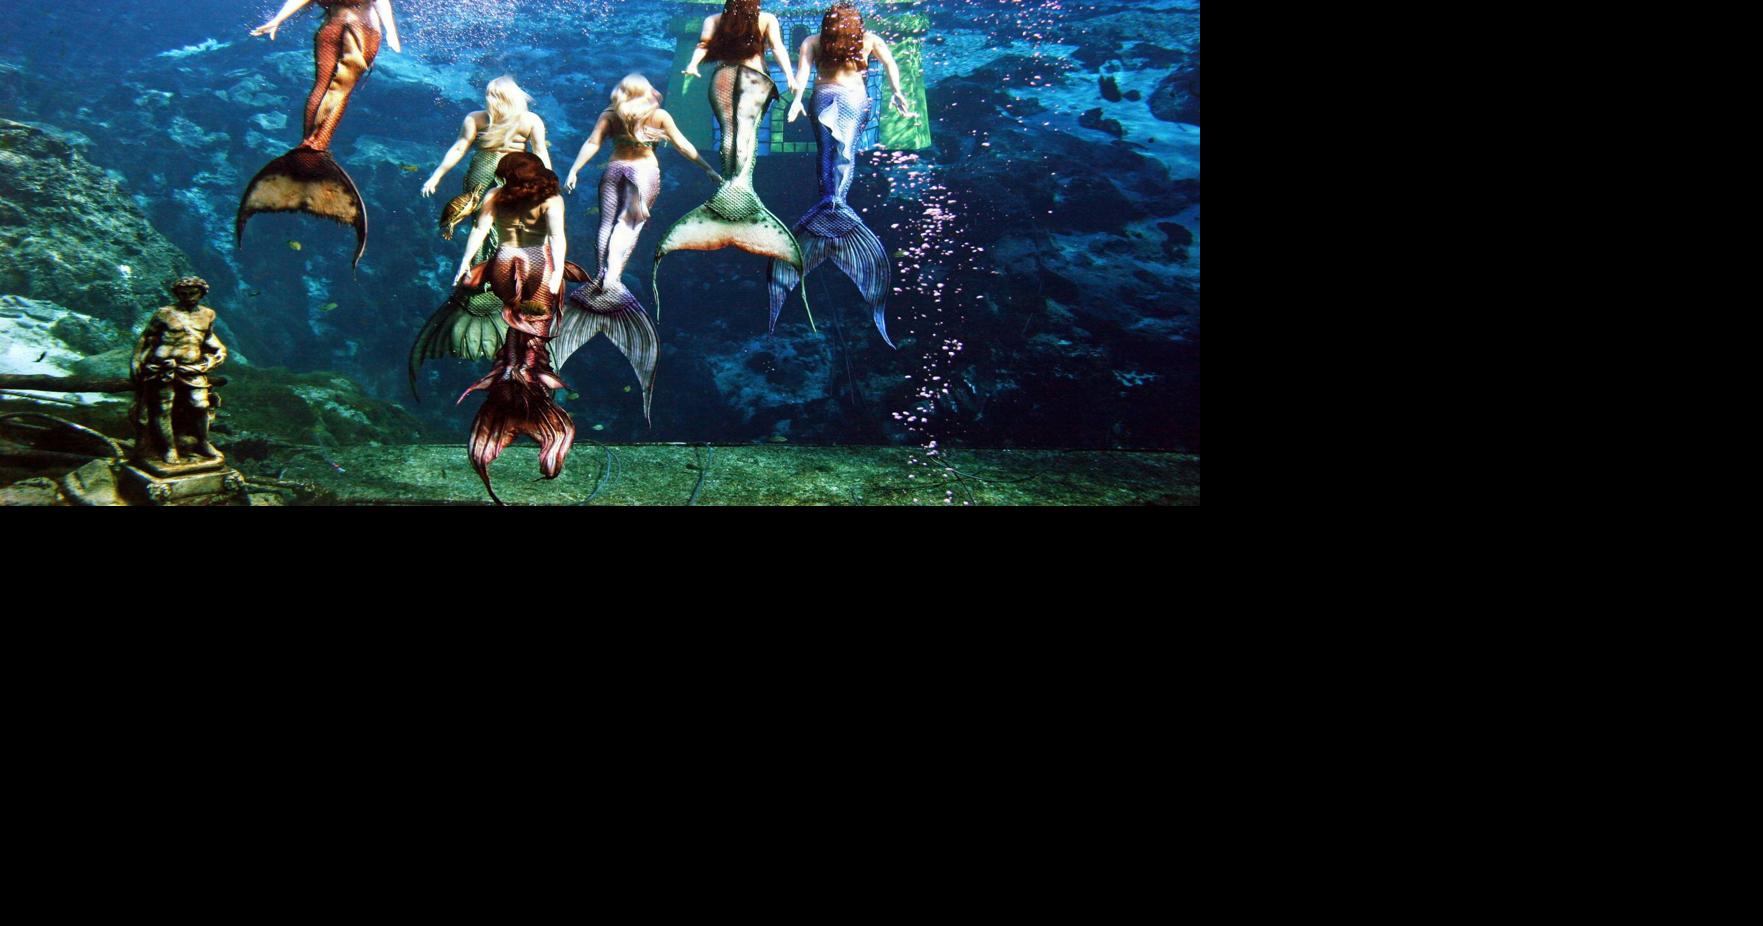 Mermaids to return to South Carolina Aquarium Business